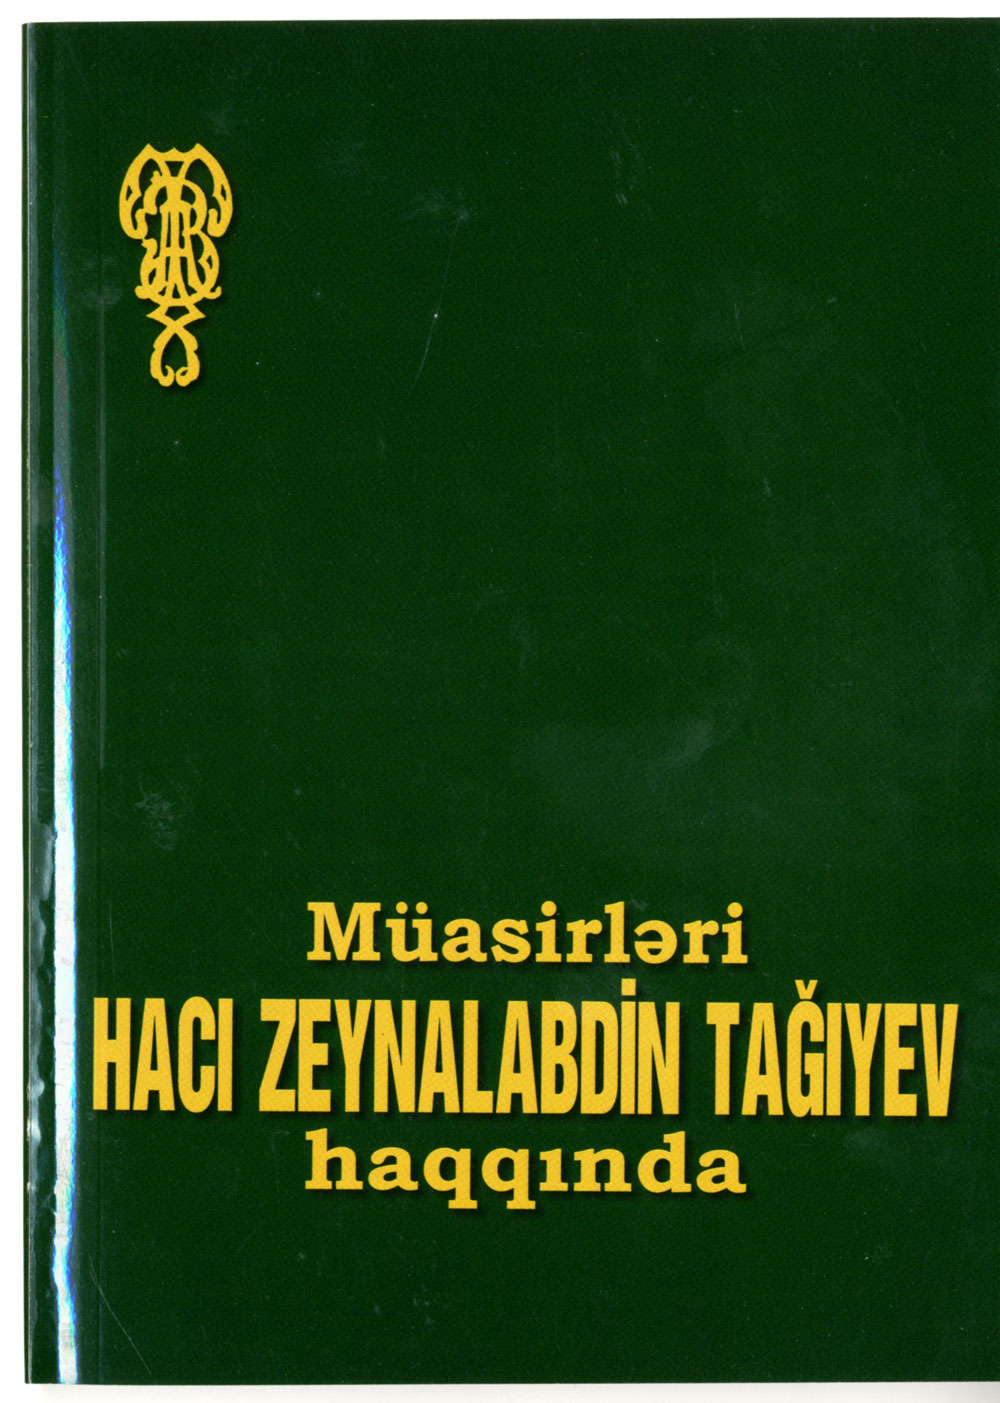  "About contemporaries Haji Zeynalabdin Tagiyev"